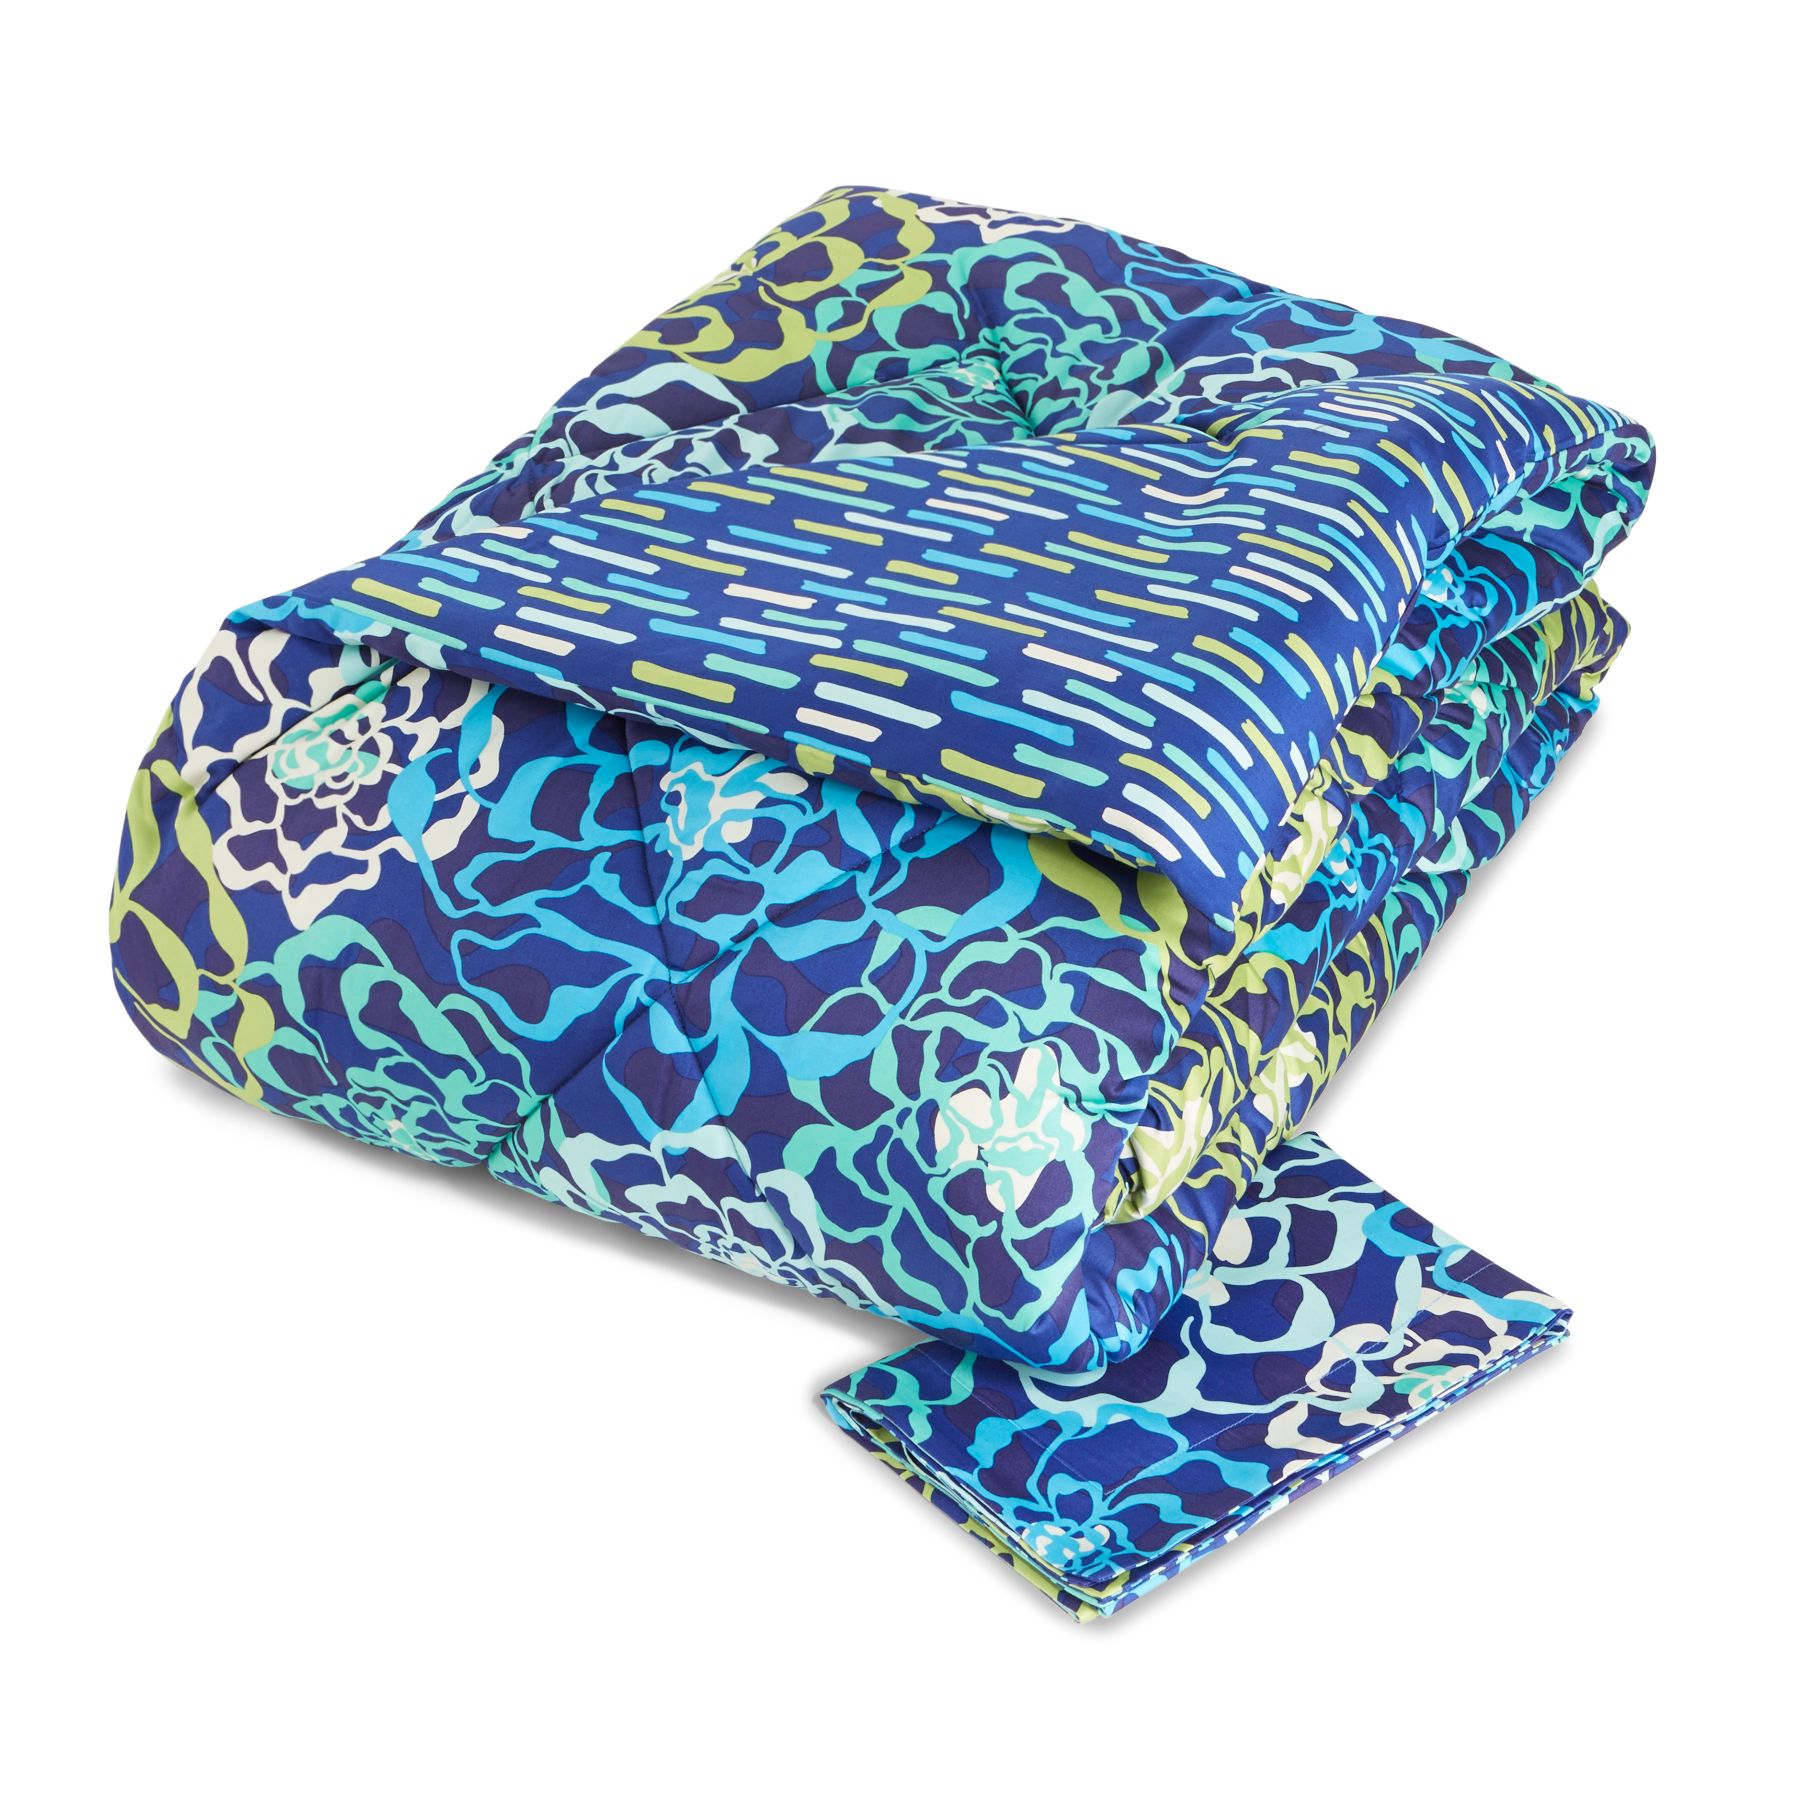 Vera Bradley Cozy Comforter Bedding Set Twin/XL | eBay